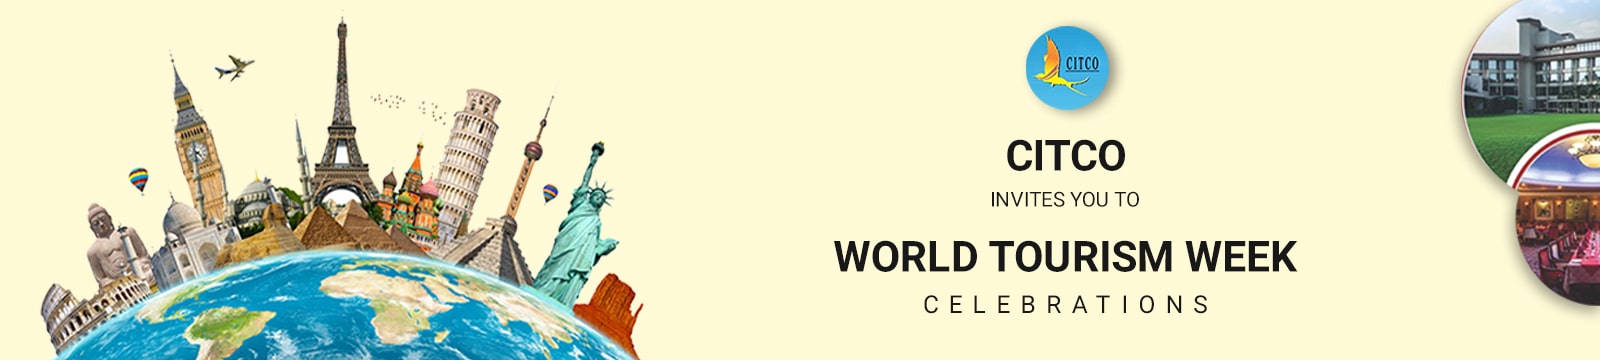 Chandigarh Celebrates World Tourism Week 2018